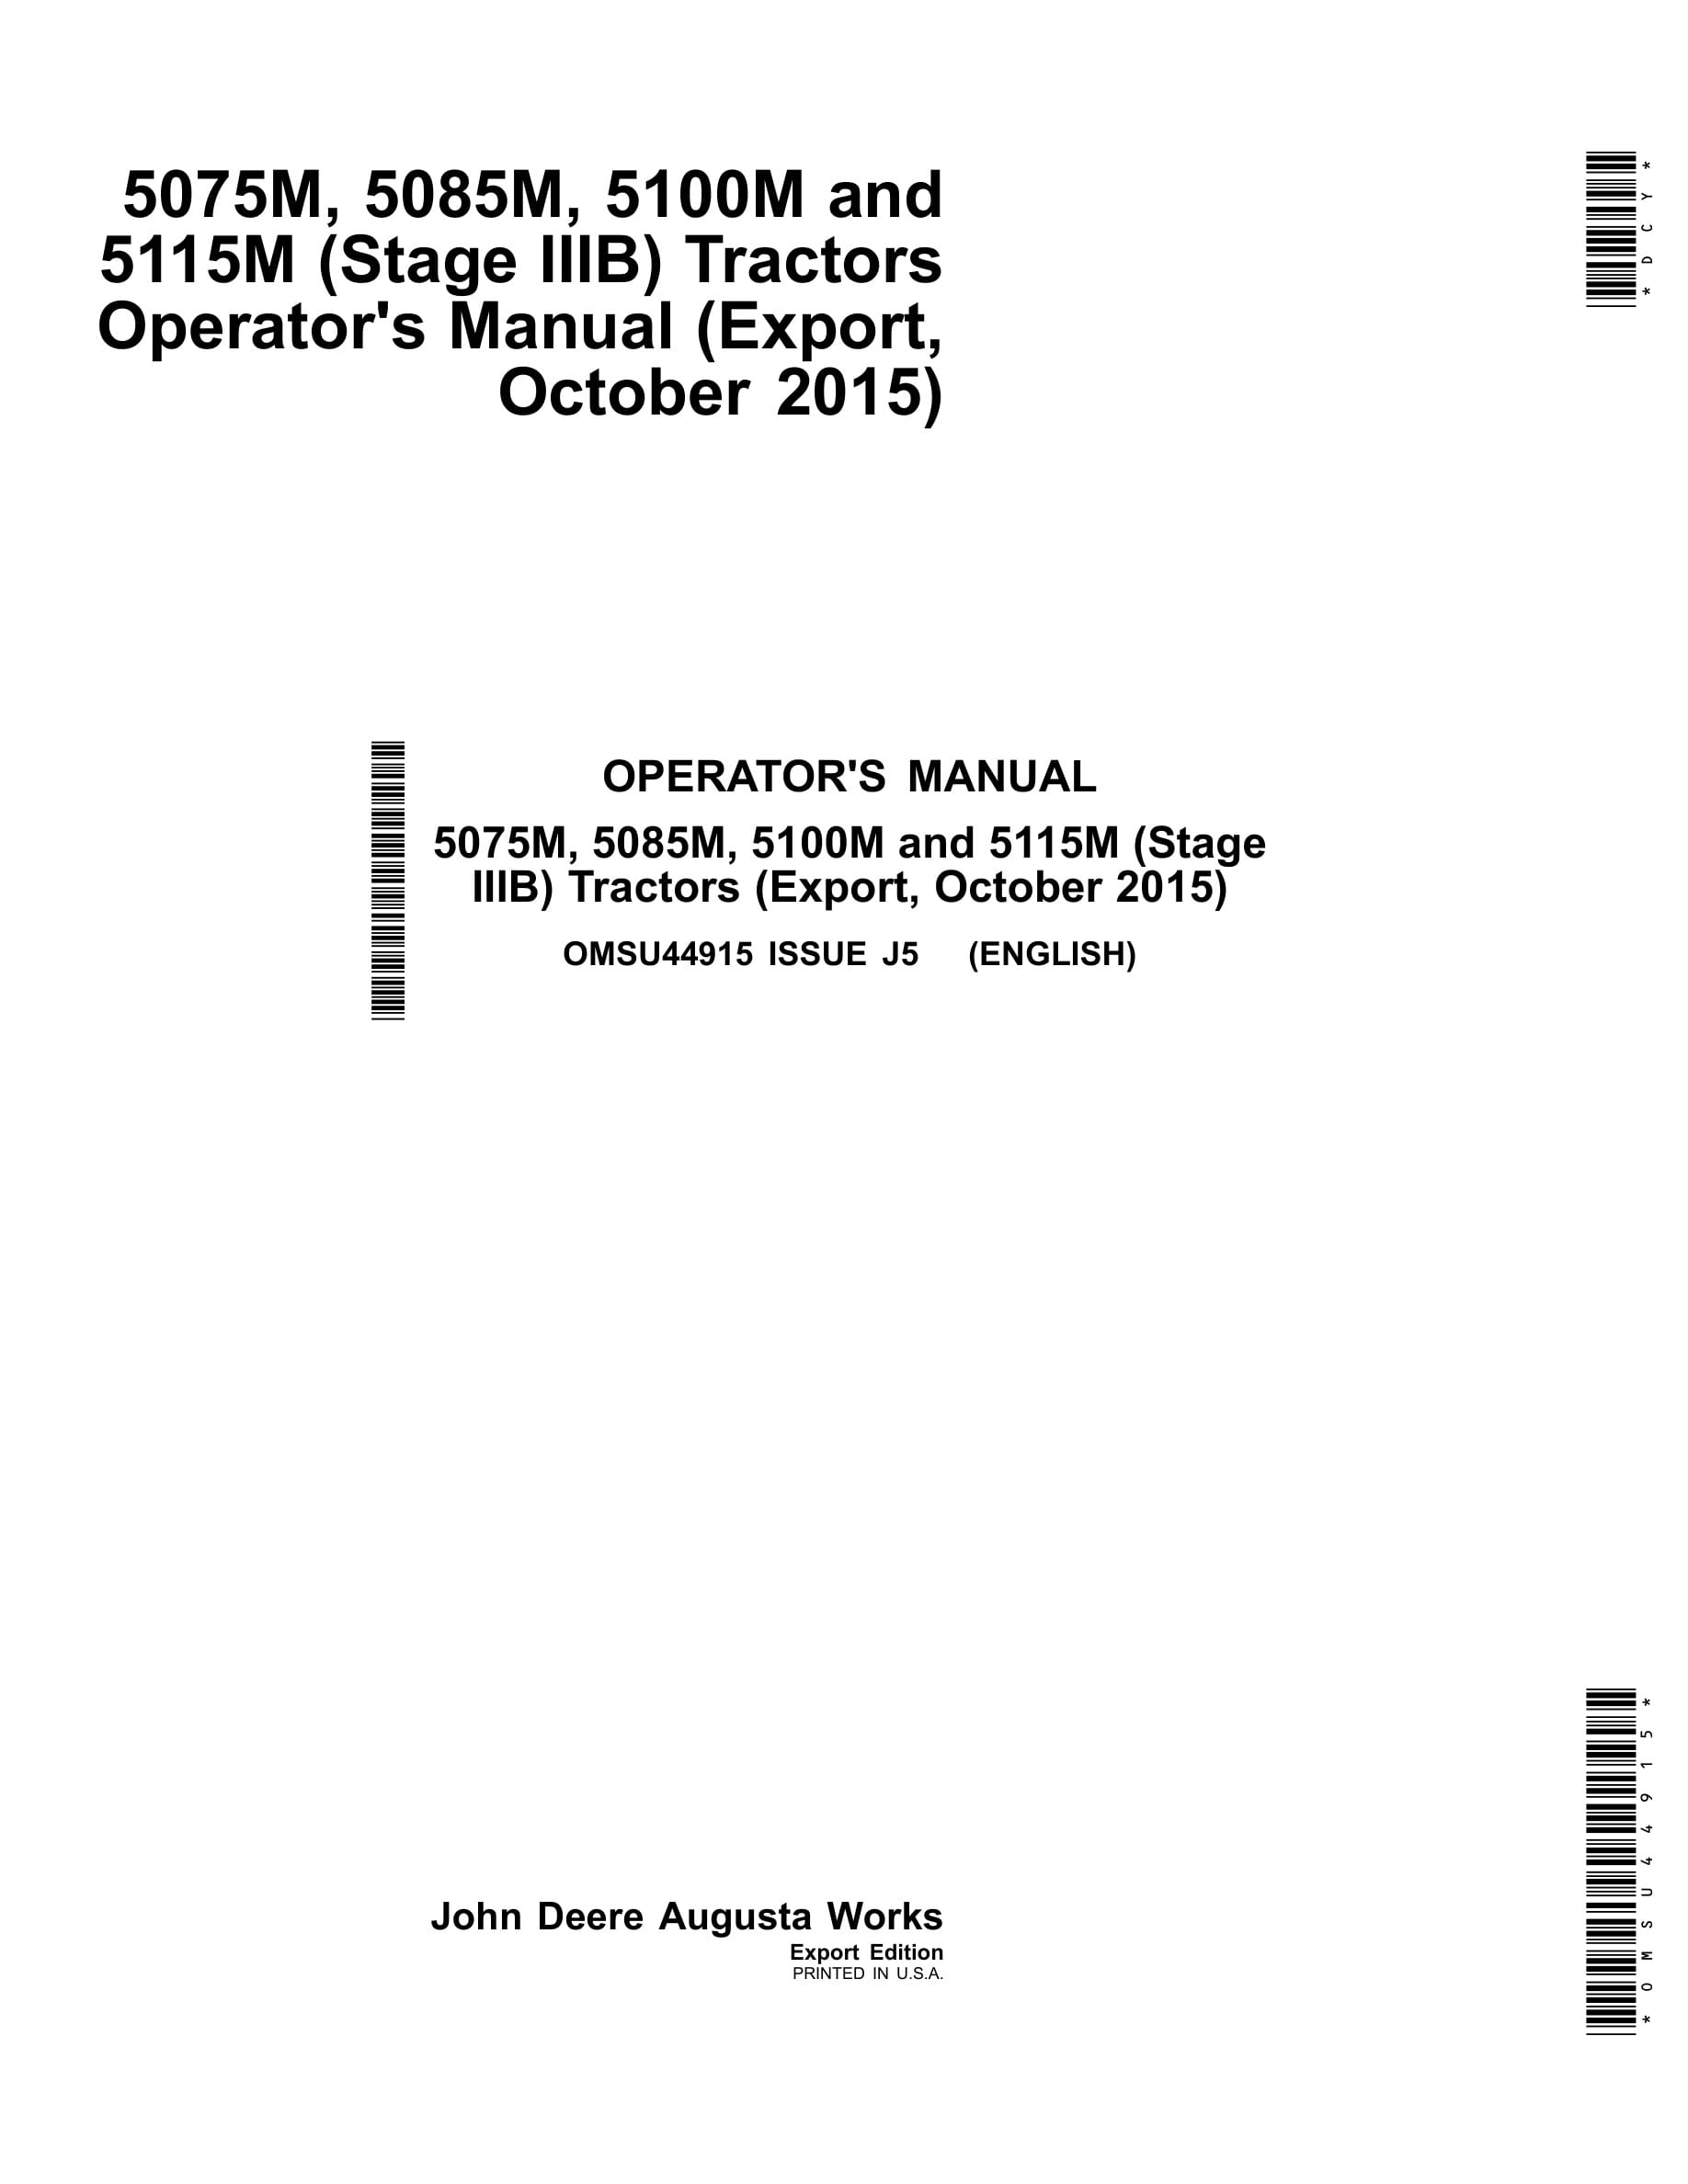 John Deere 5075m, 5085m, 5100m And 5115m (stage Iiib) Tractors Operator Manuals OMSU44915-1